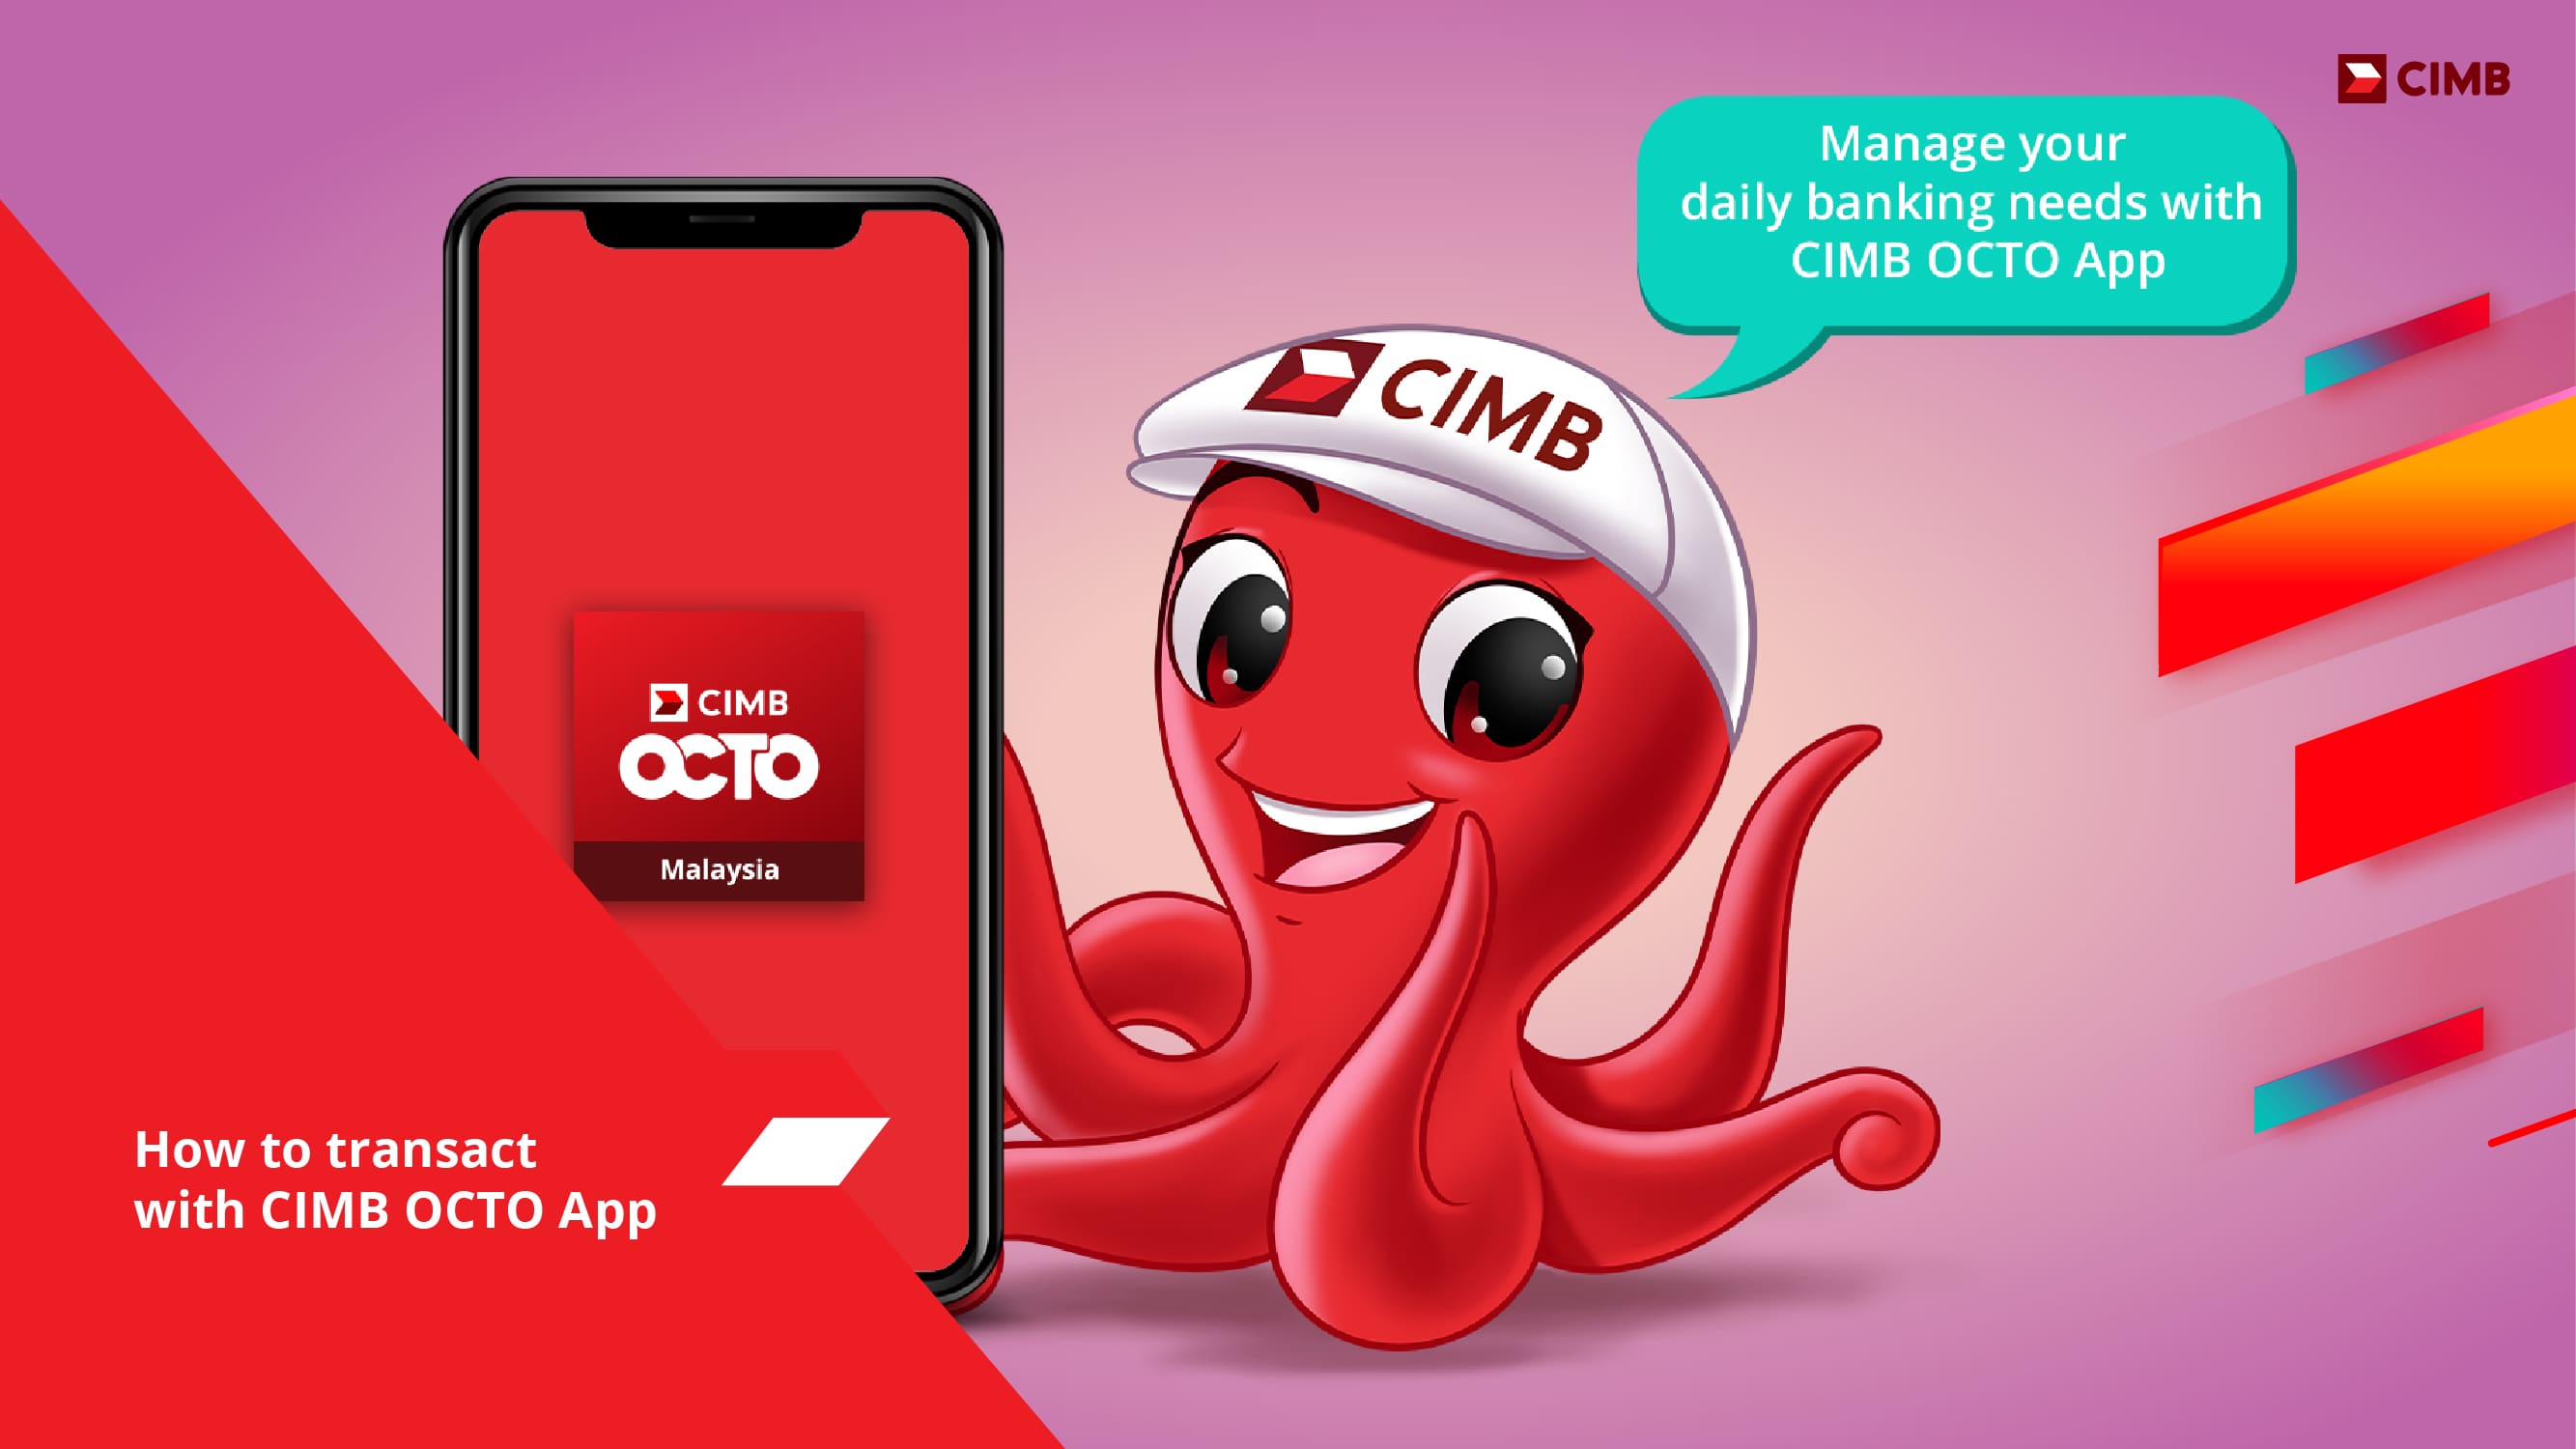 How to transact with CIMB OCTO App